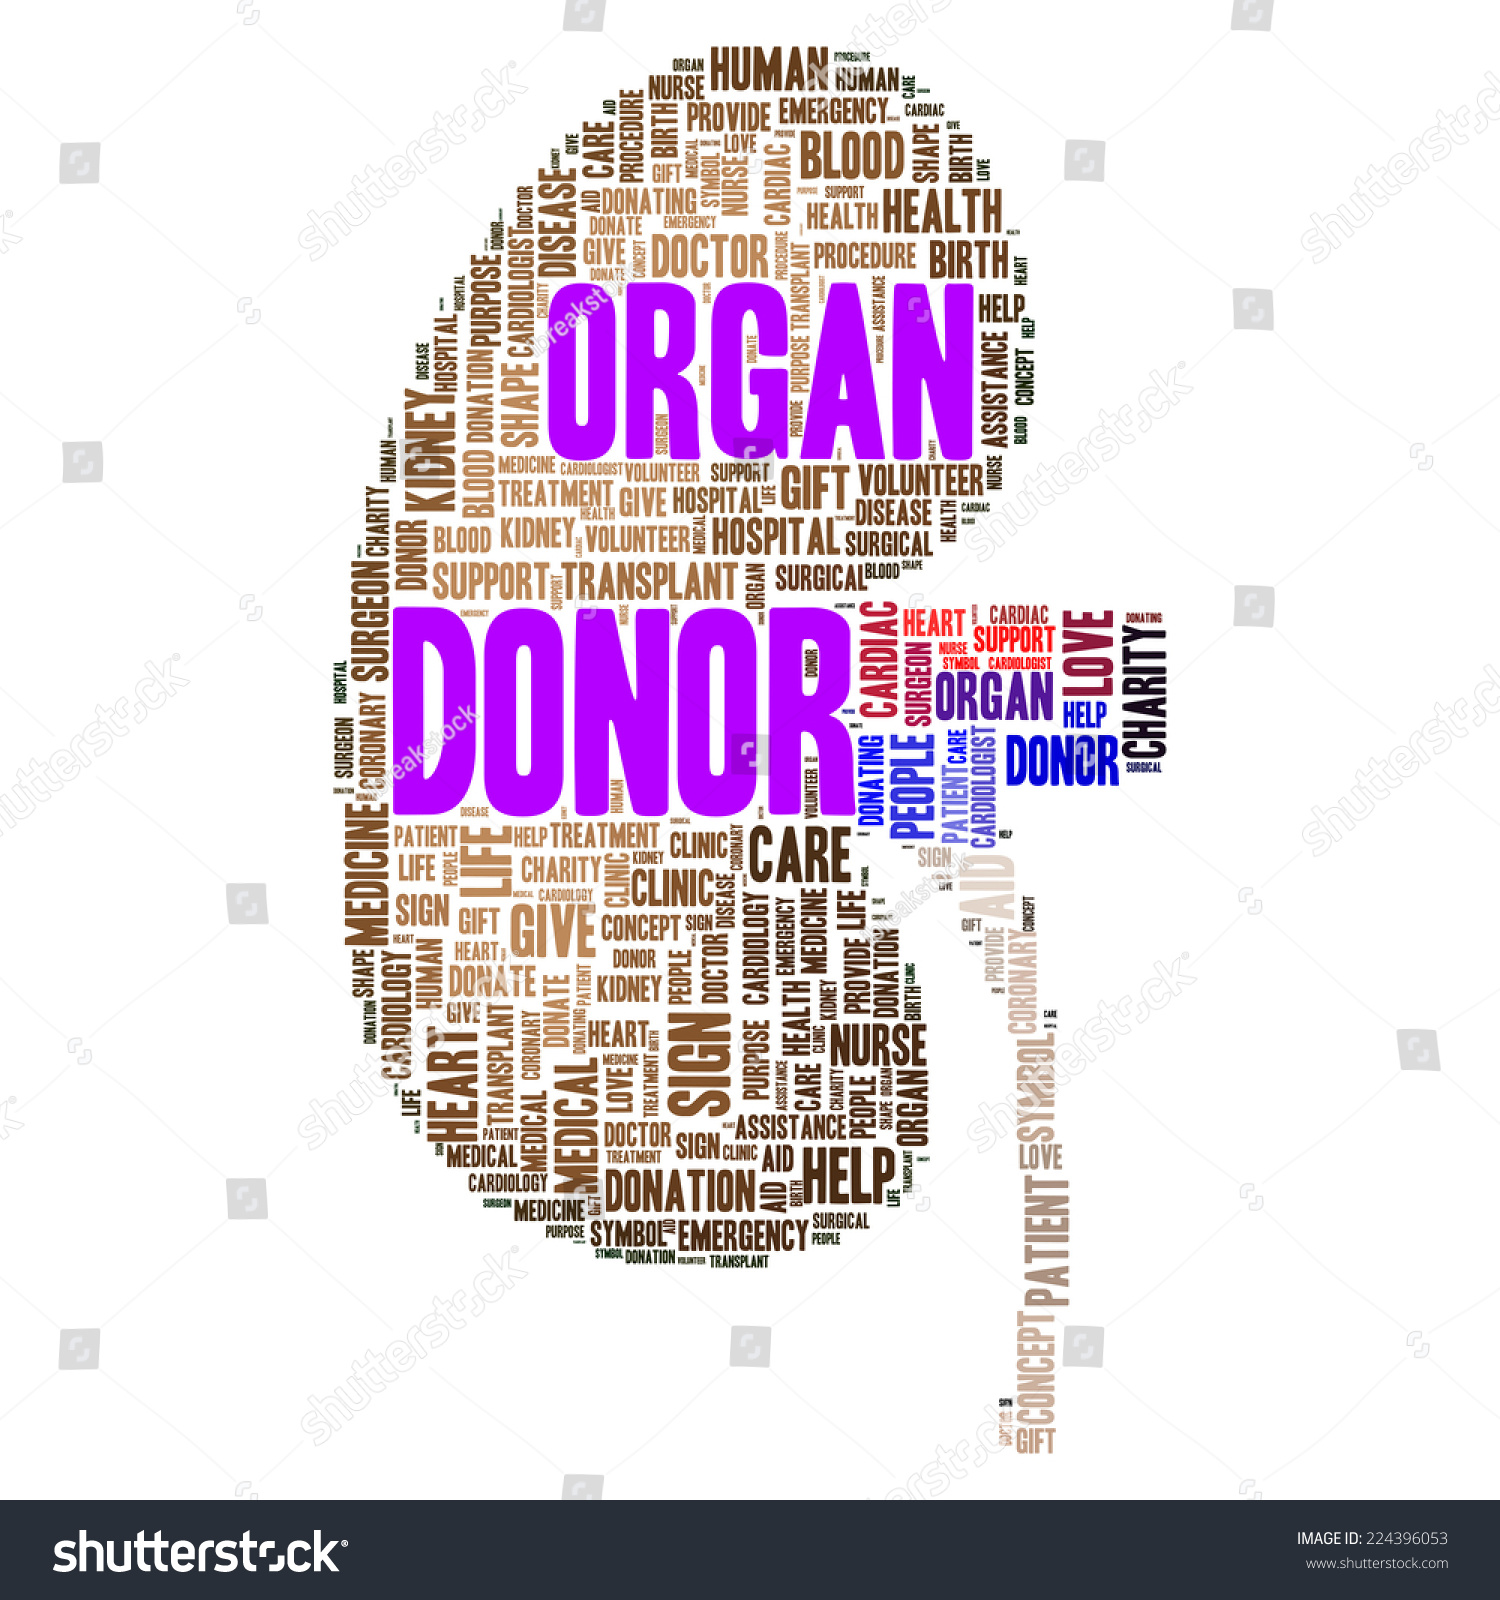 organ donor clipart - photo #50